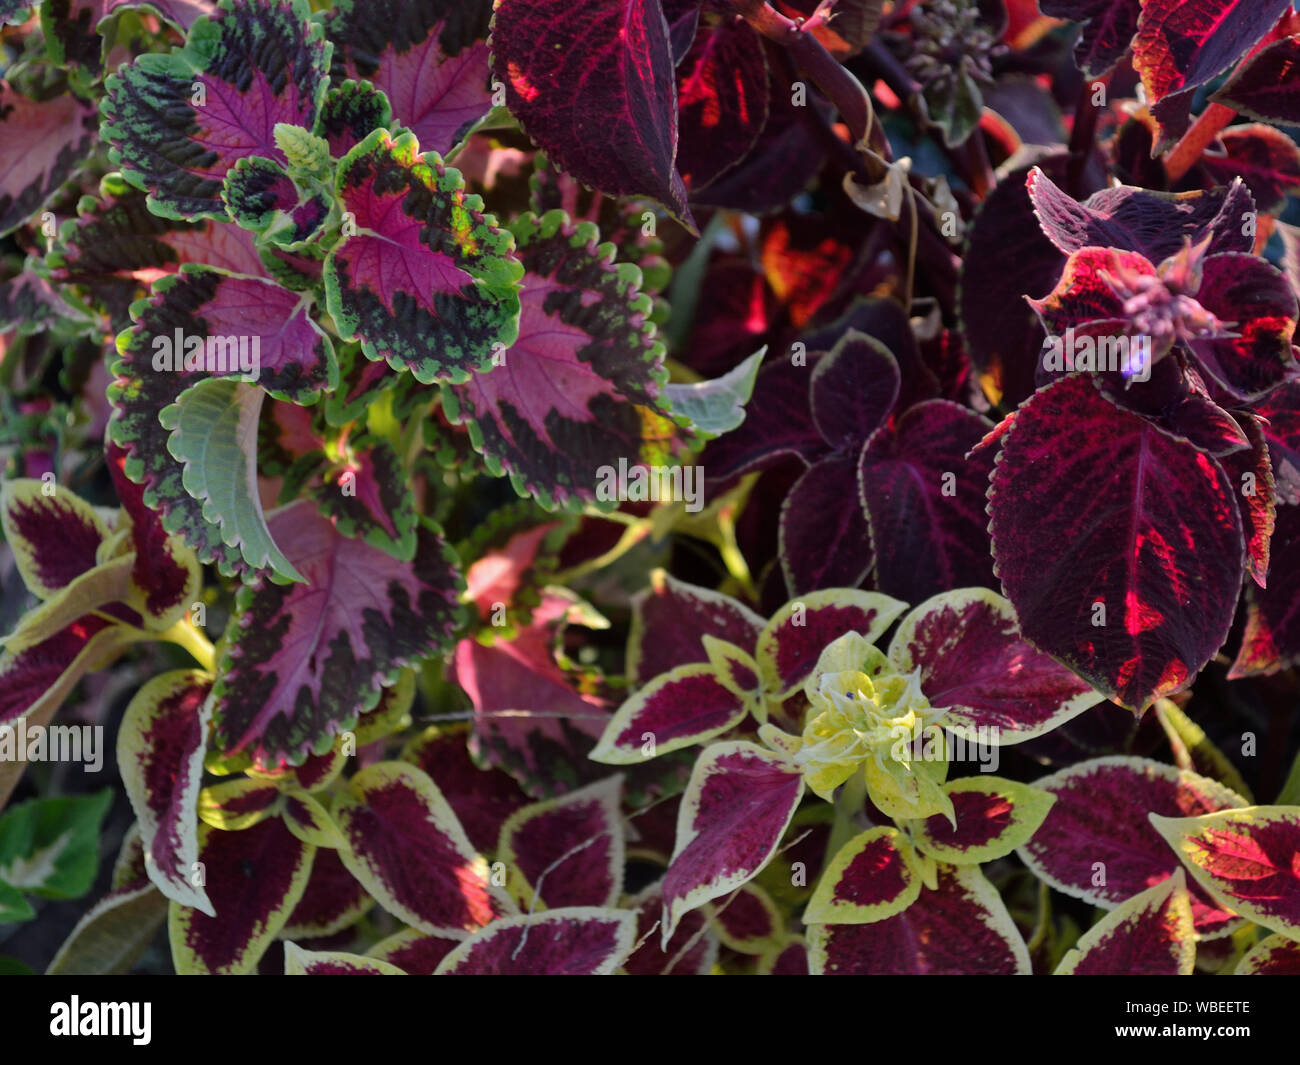 Coleus Blumei Plants In The Garden Stock Photo Alamy